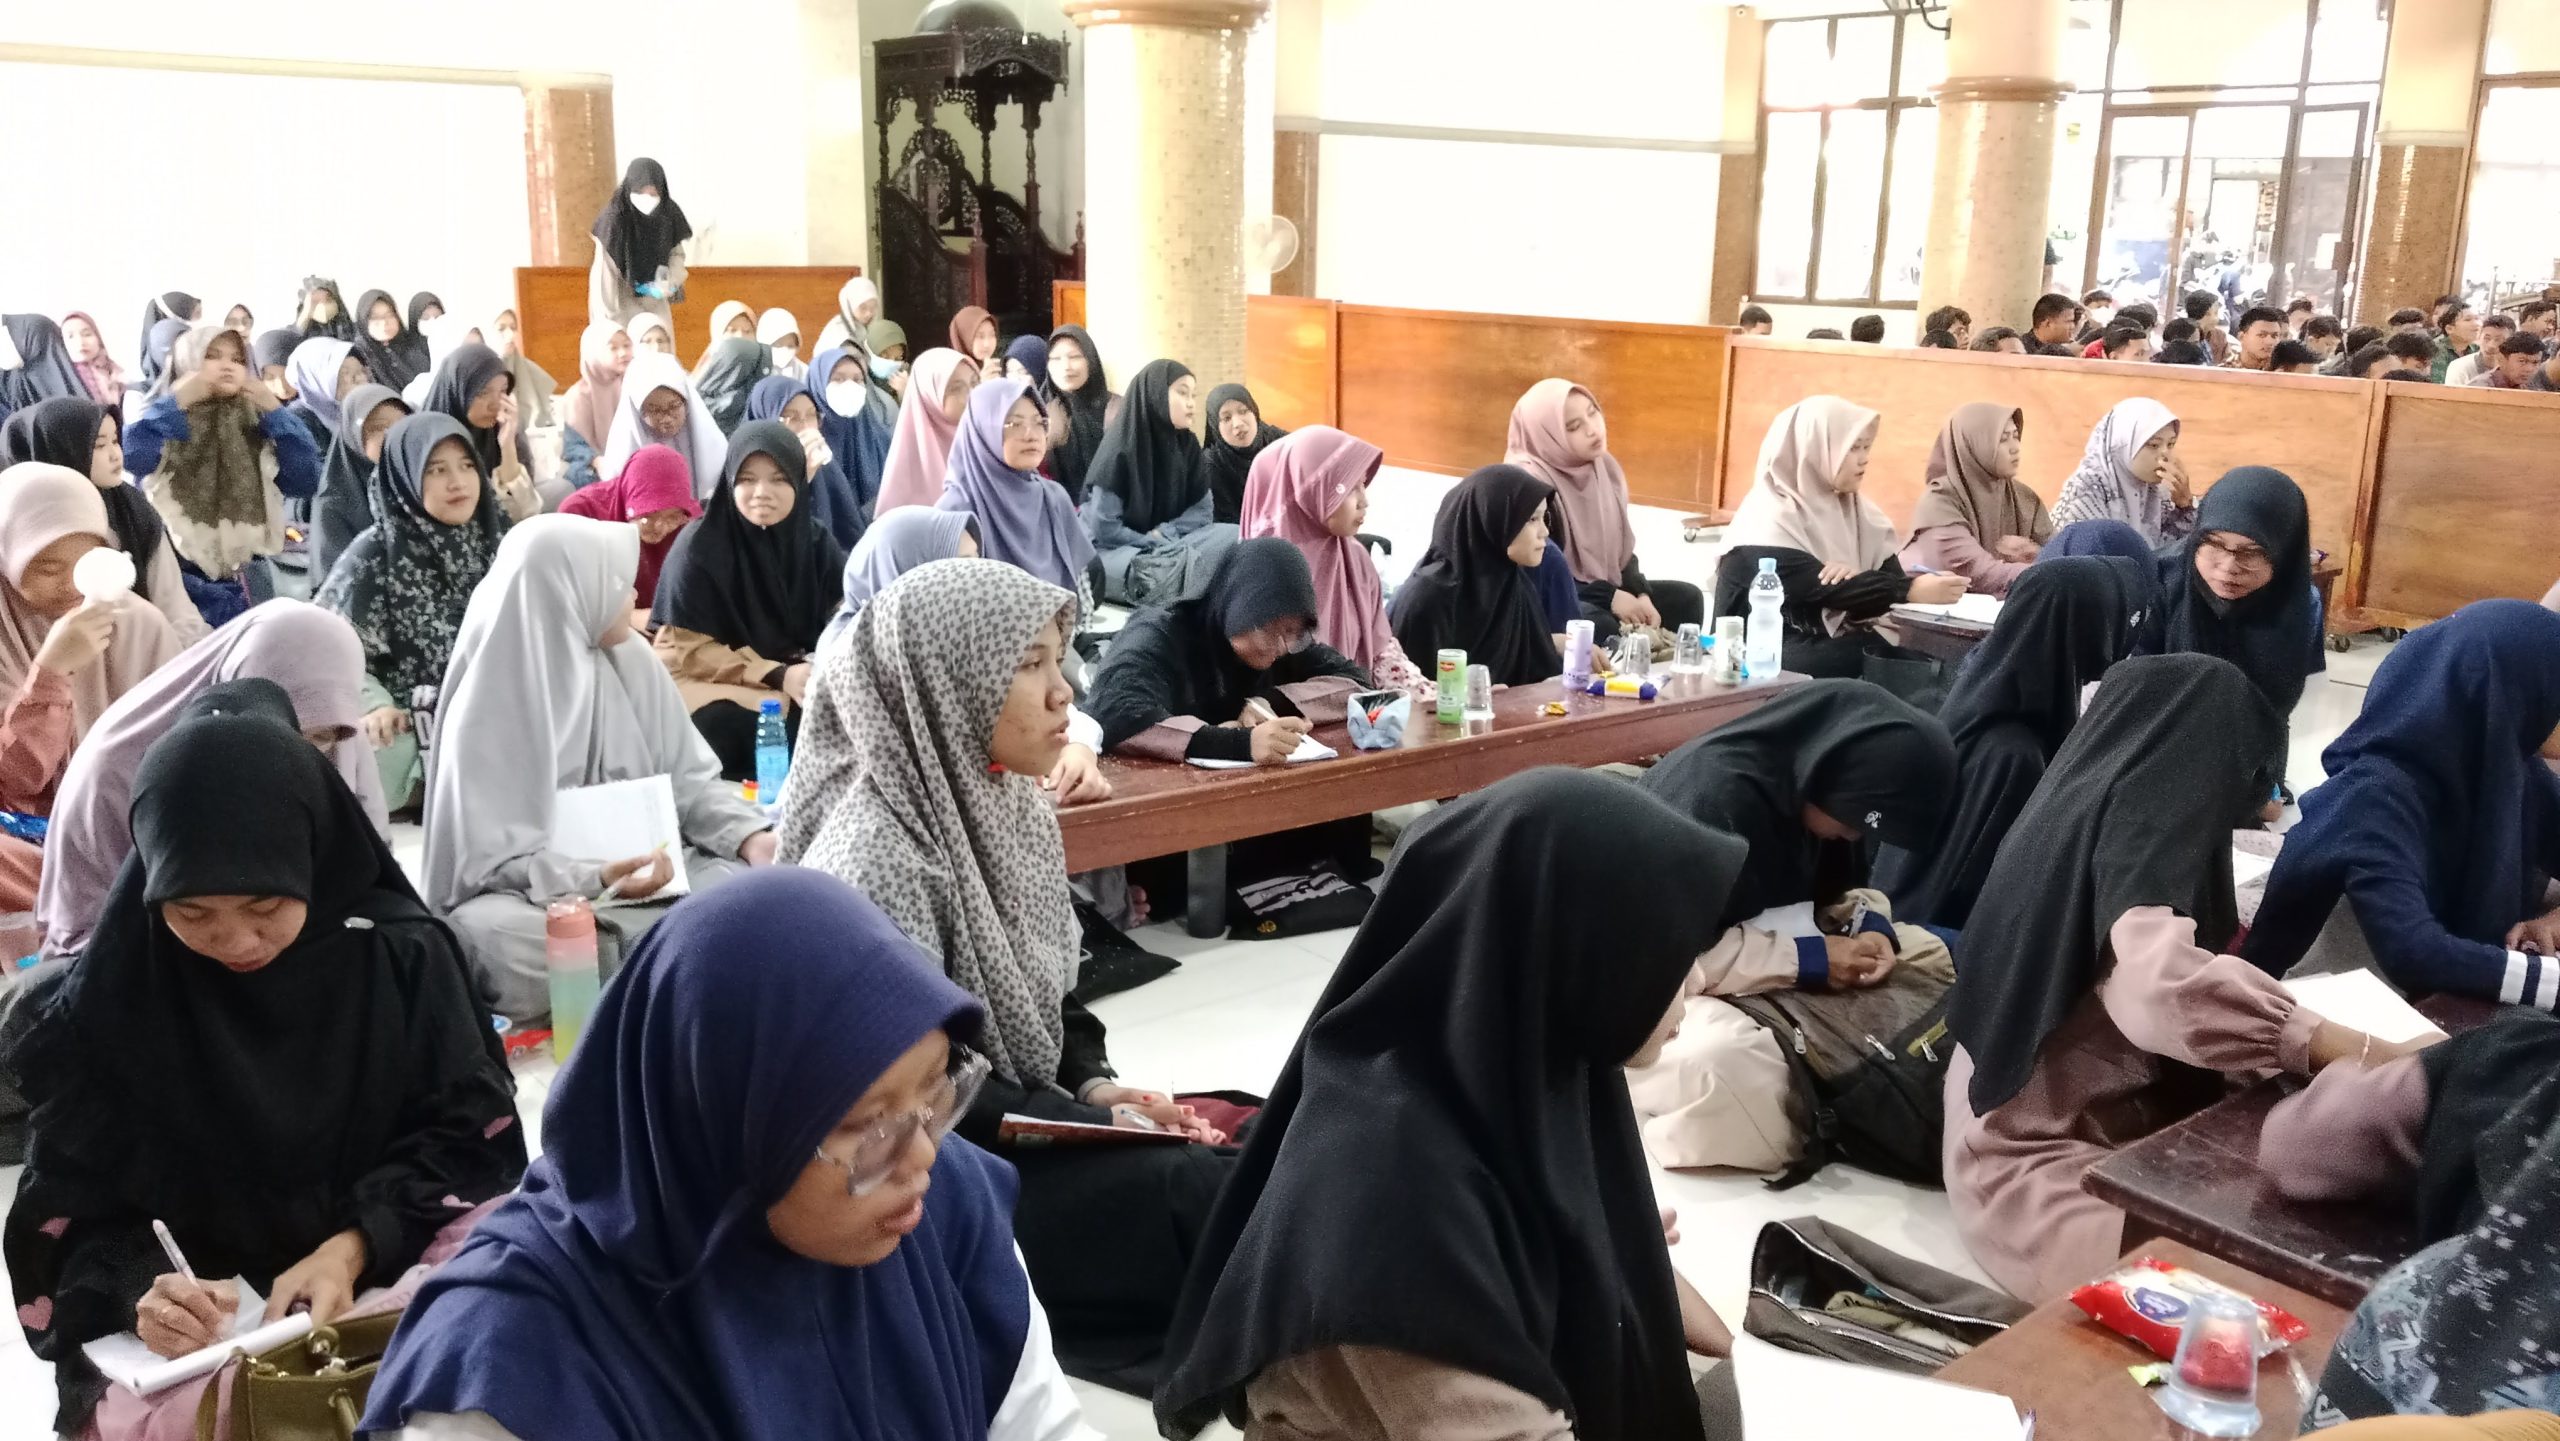 Peserta Talkshow Entrepeneur pada Minggu (21/1) di Masjid Sabilul Muttaqin, Bronggalan.